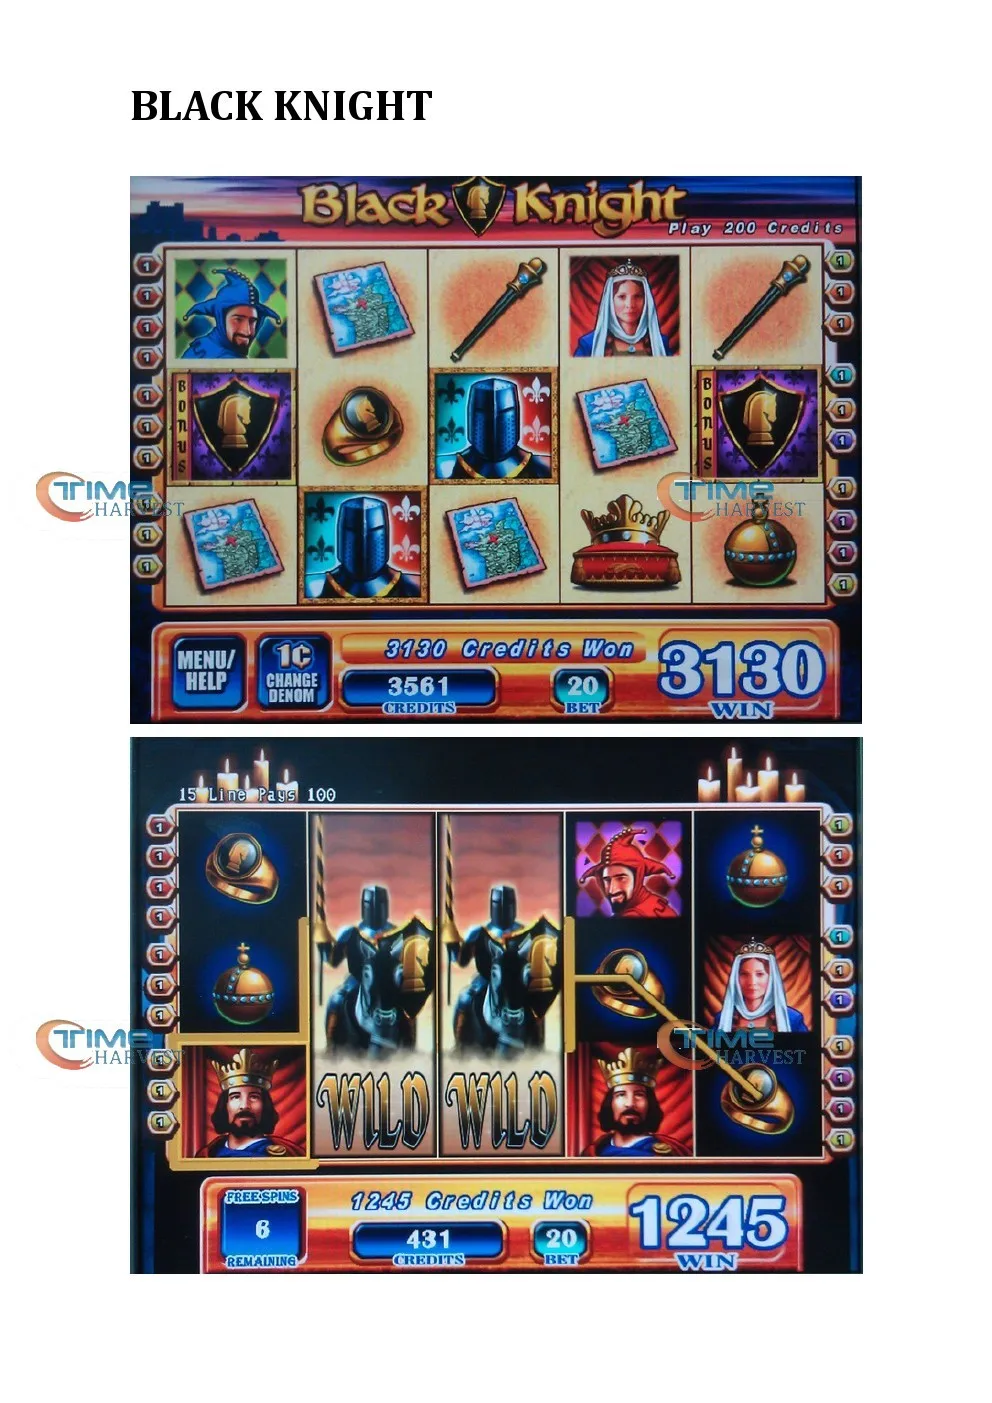 Black Knight-tablero de juego de Casino NXT WMS, soporte para pantalla táctil y aceptador de facturas, máquina operadora de monedas